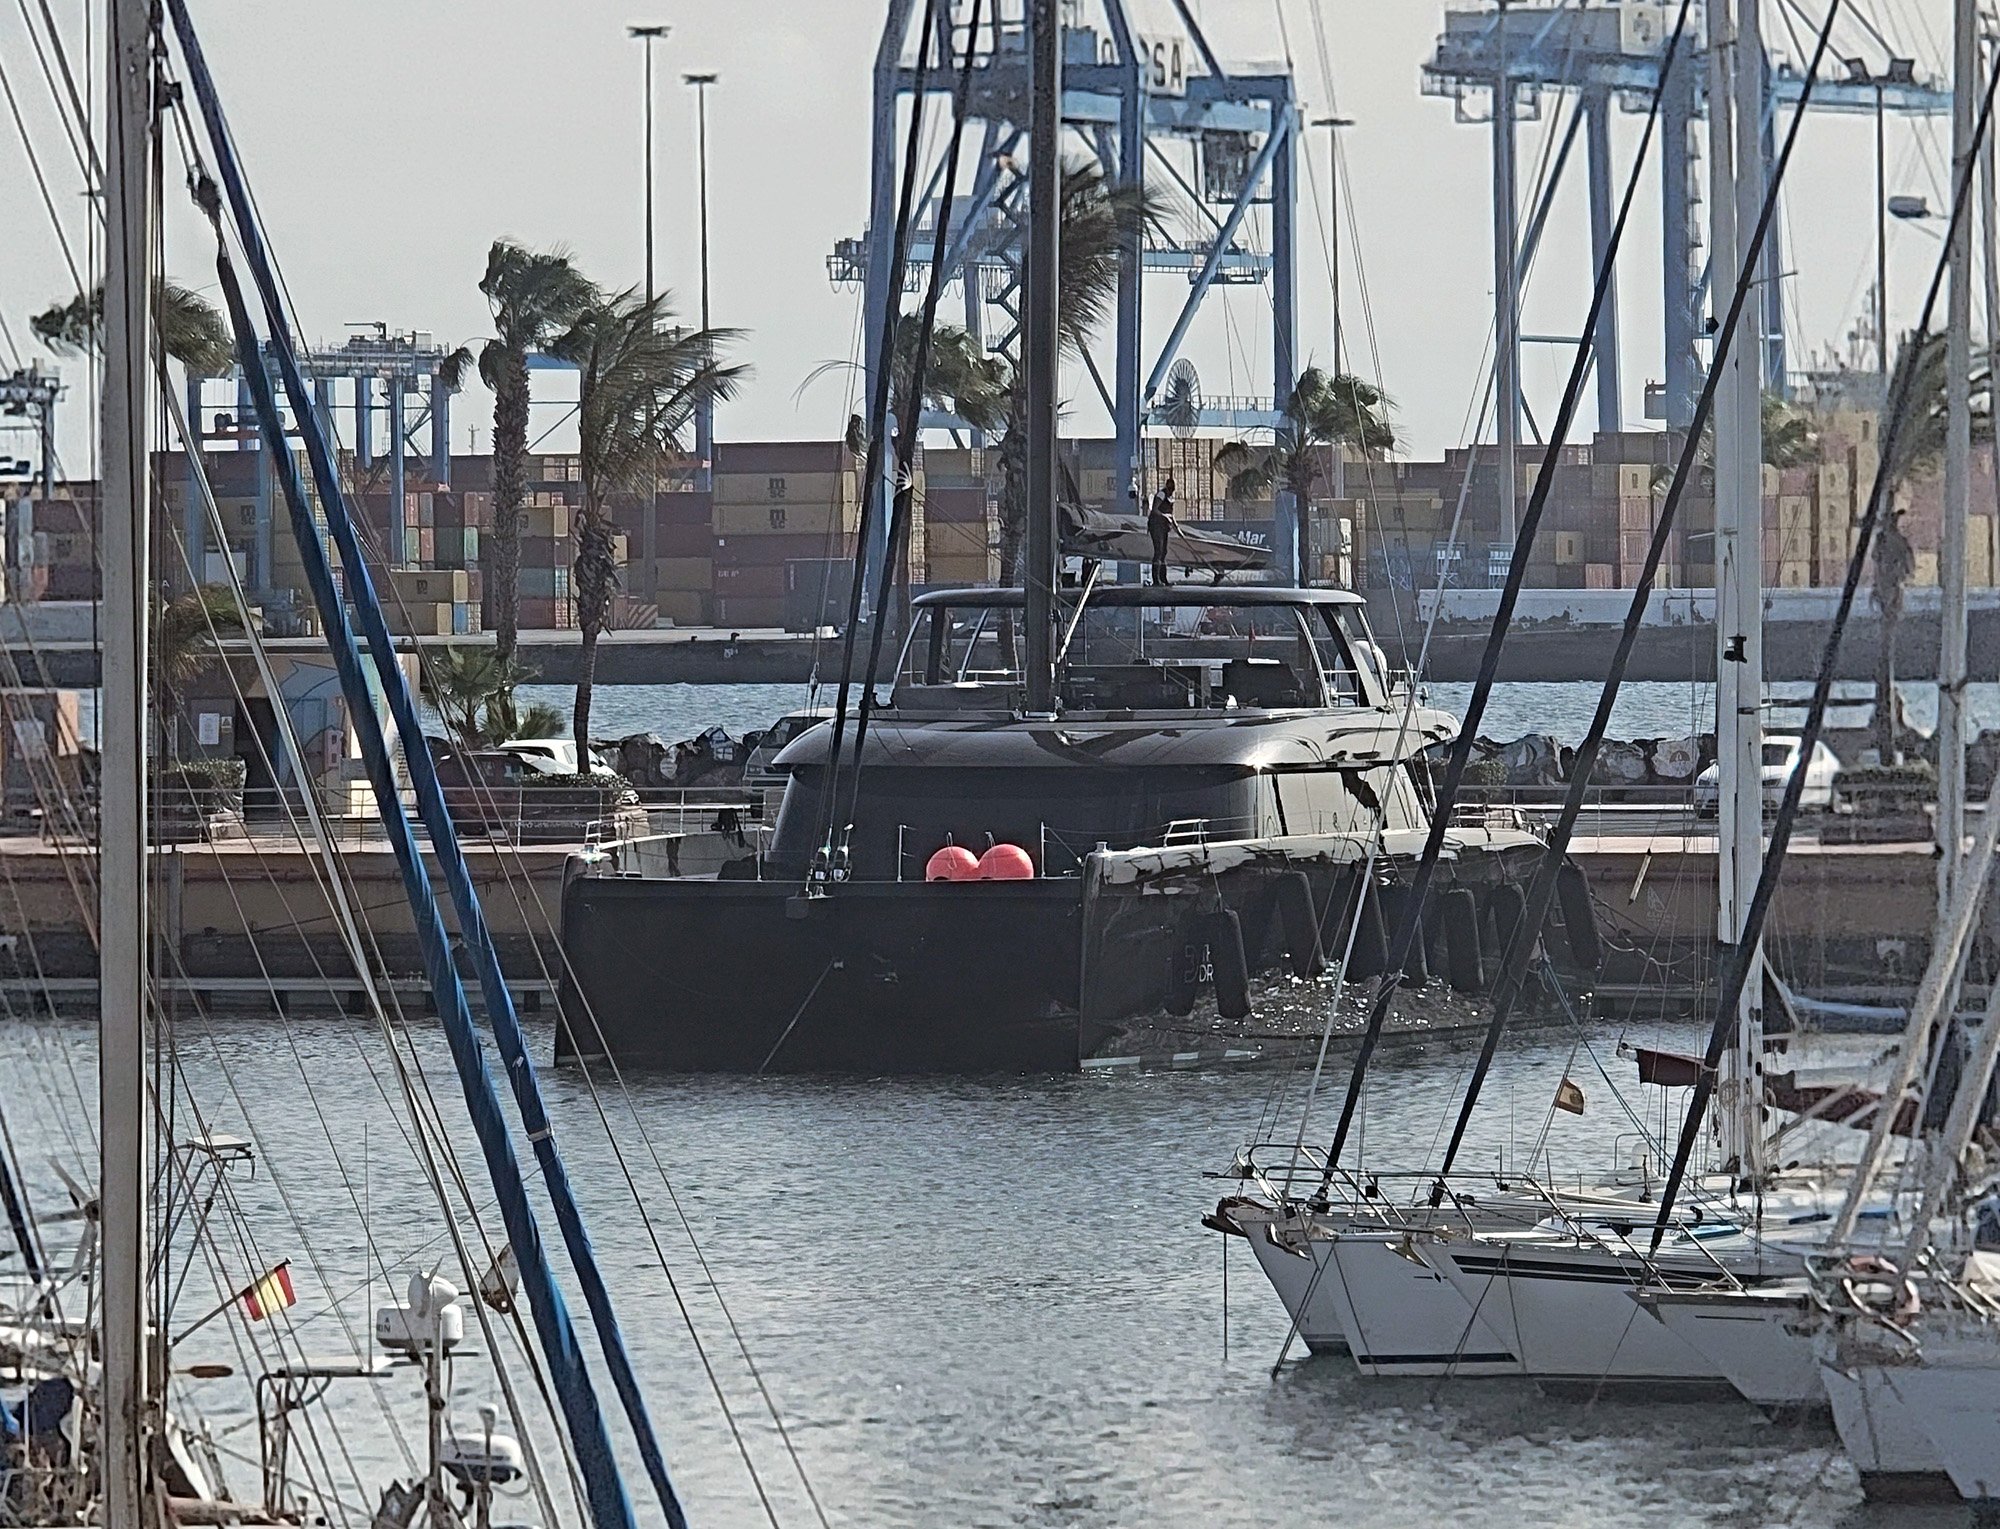 Even Batman's boat is here.